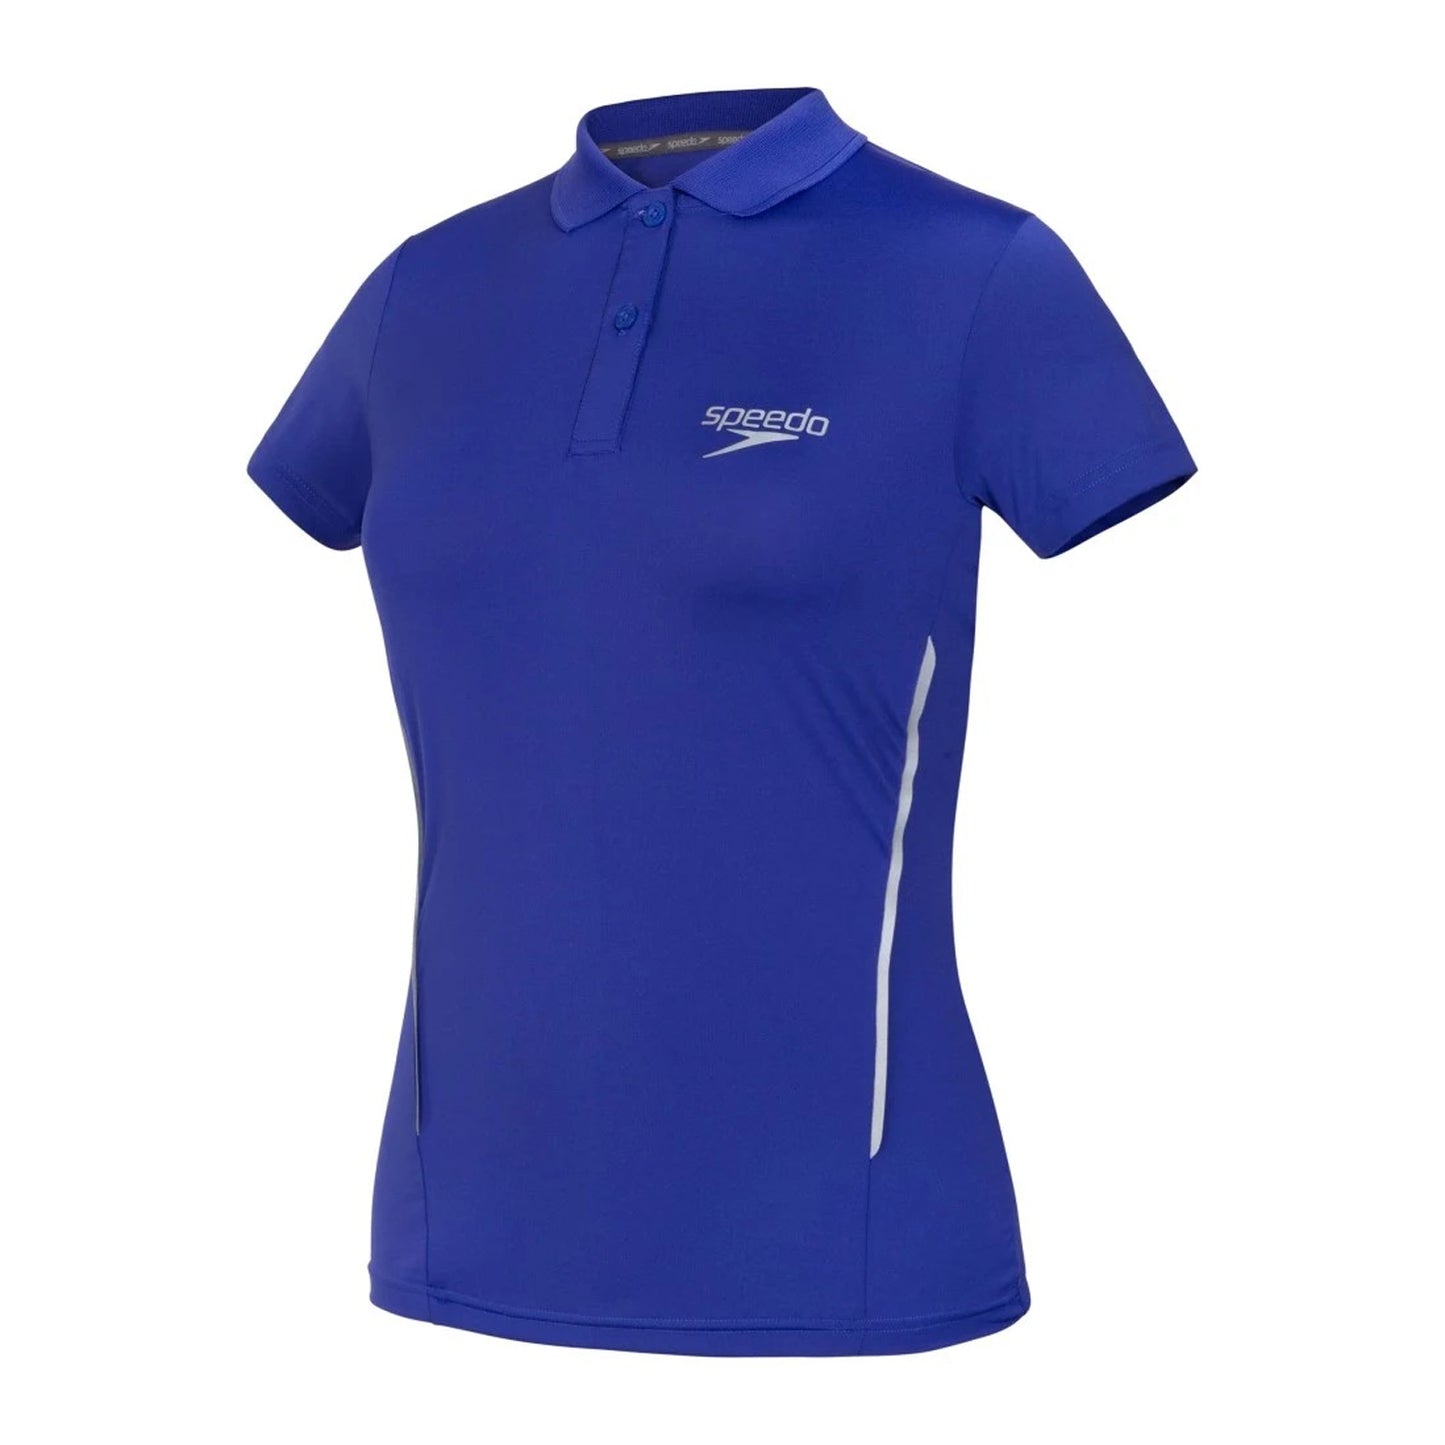 Speedo Dry Polo T-Shirt (Ultramarine/Silver) - Best Price online Prokicksports.com